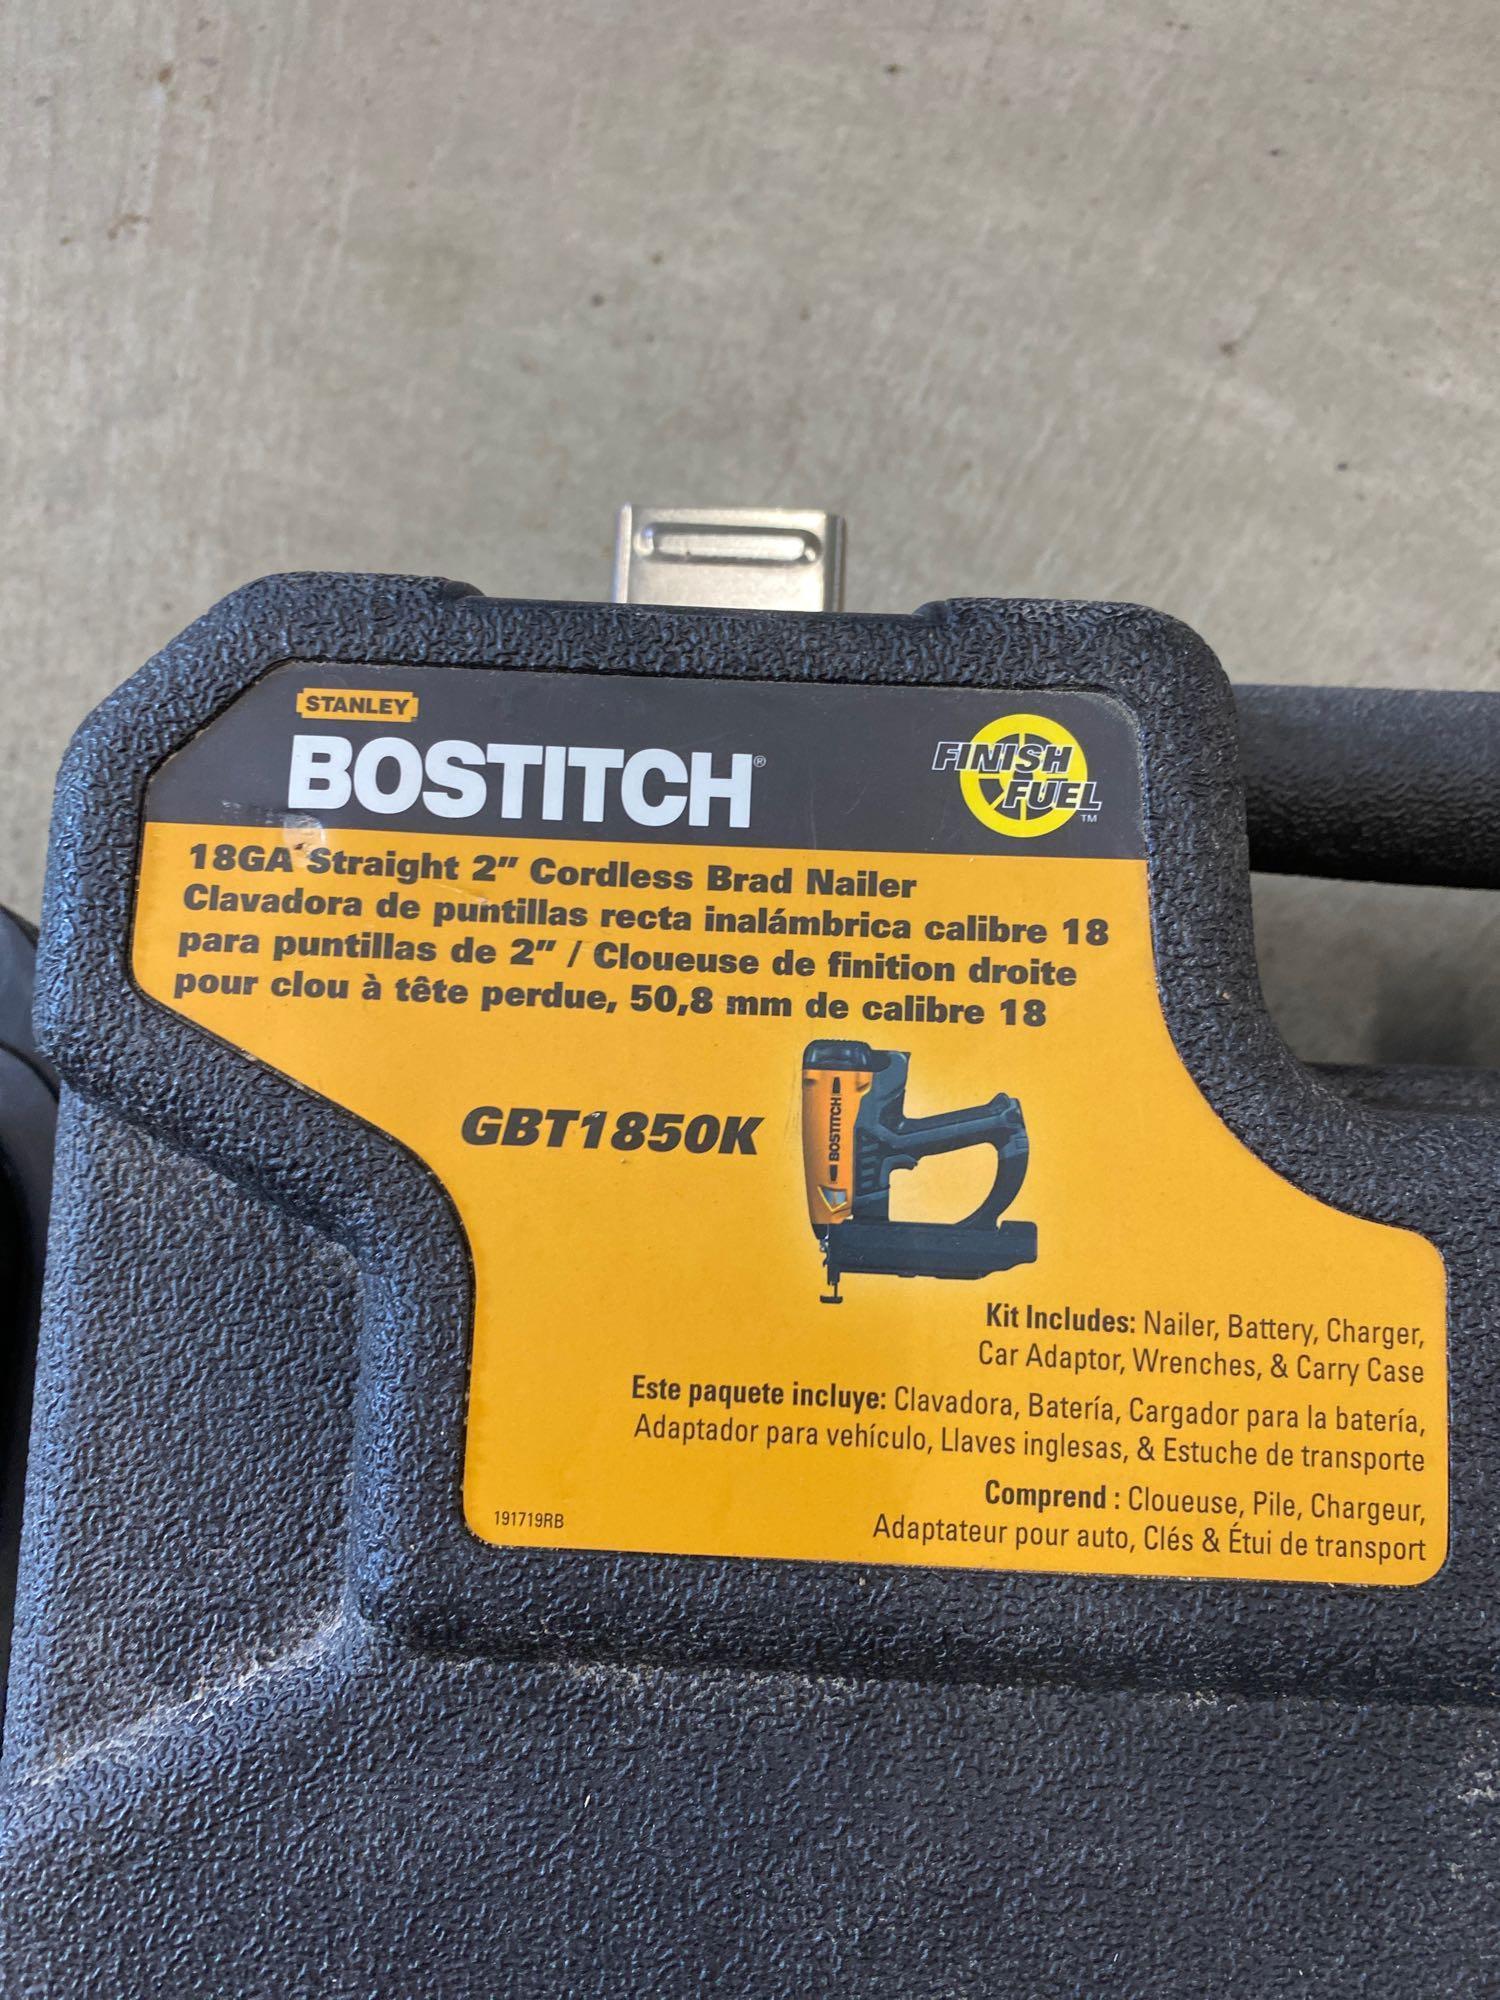 Bostitch GBT1850K battery operated nailer